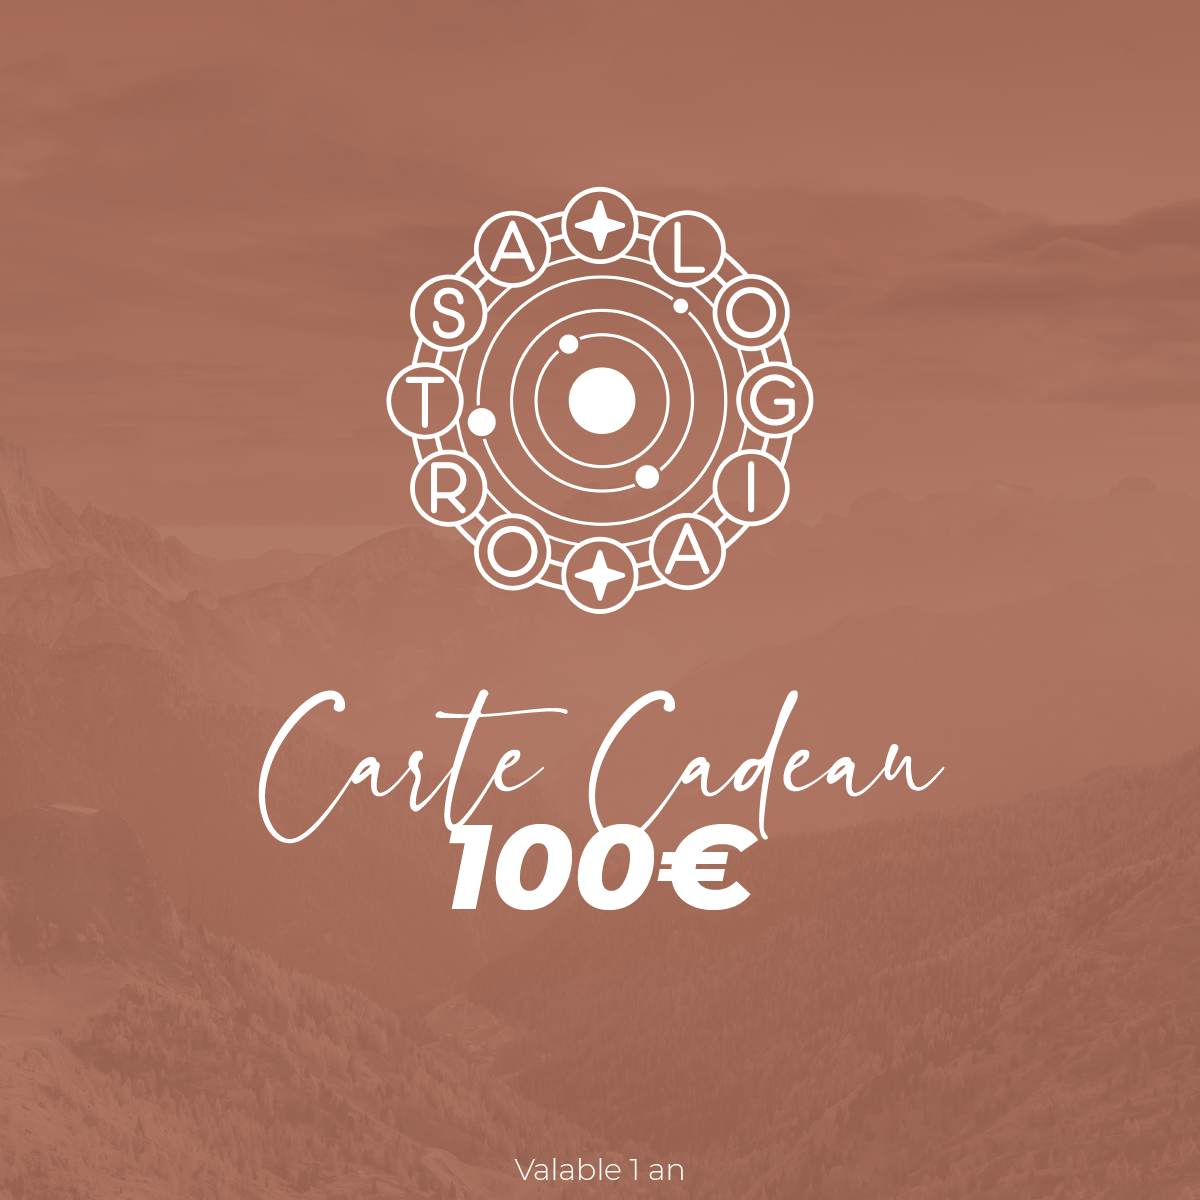 Astrocard 100 euro